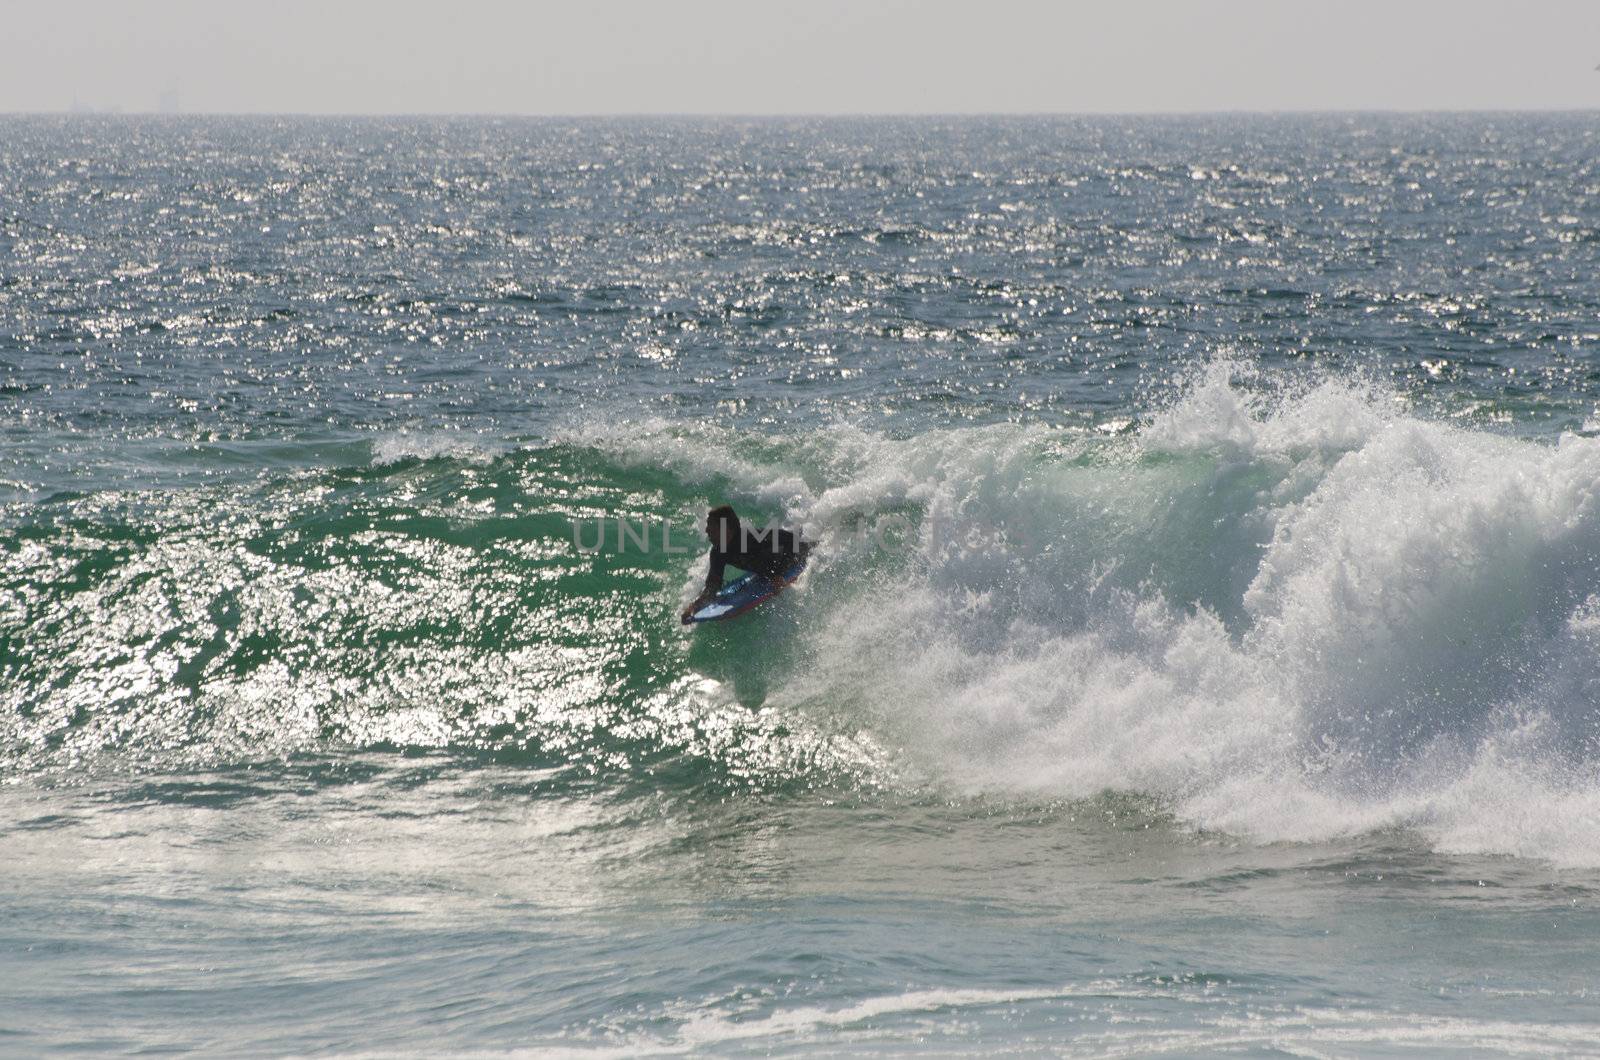 body boarder riding a big wave by homydesign